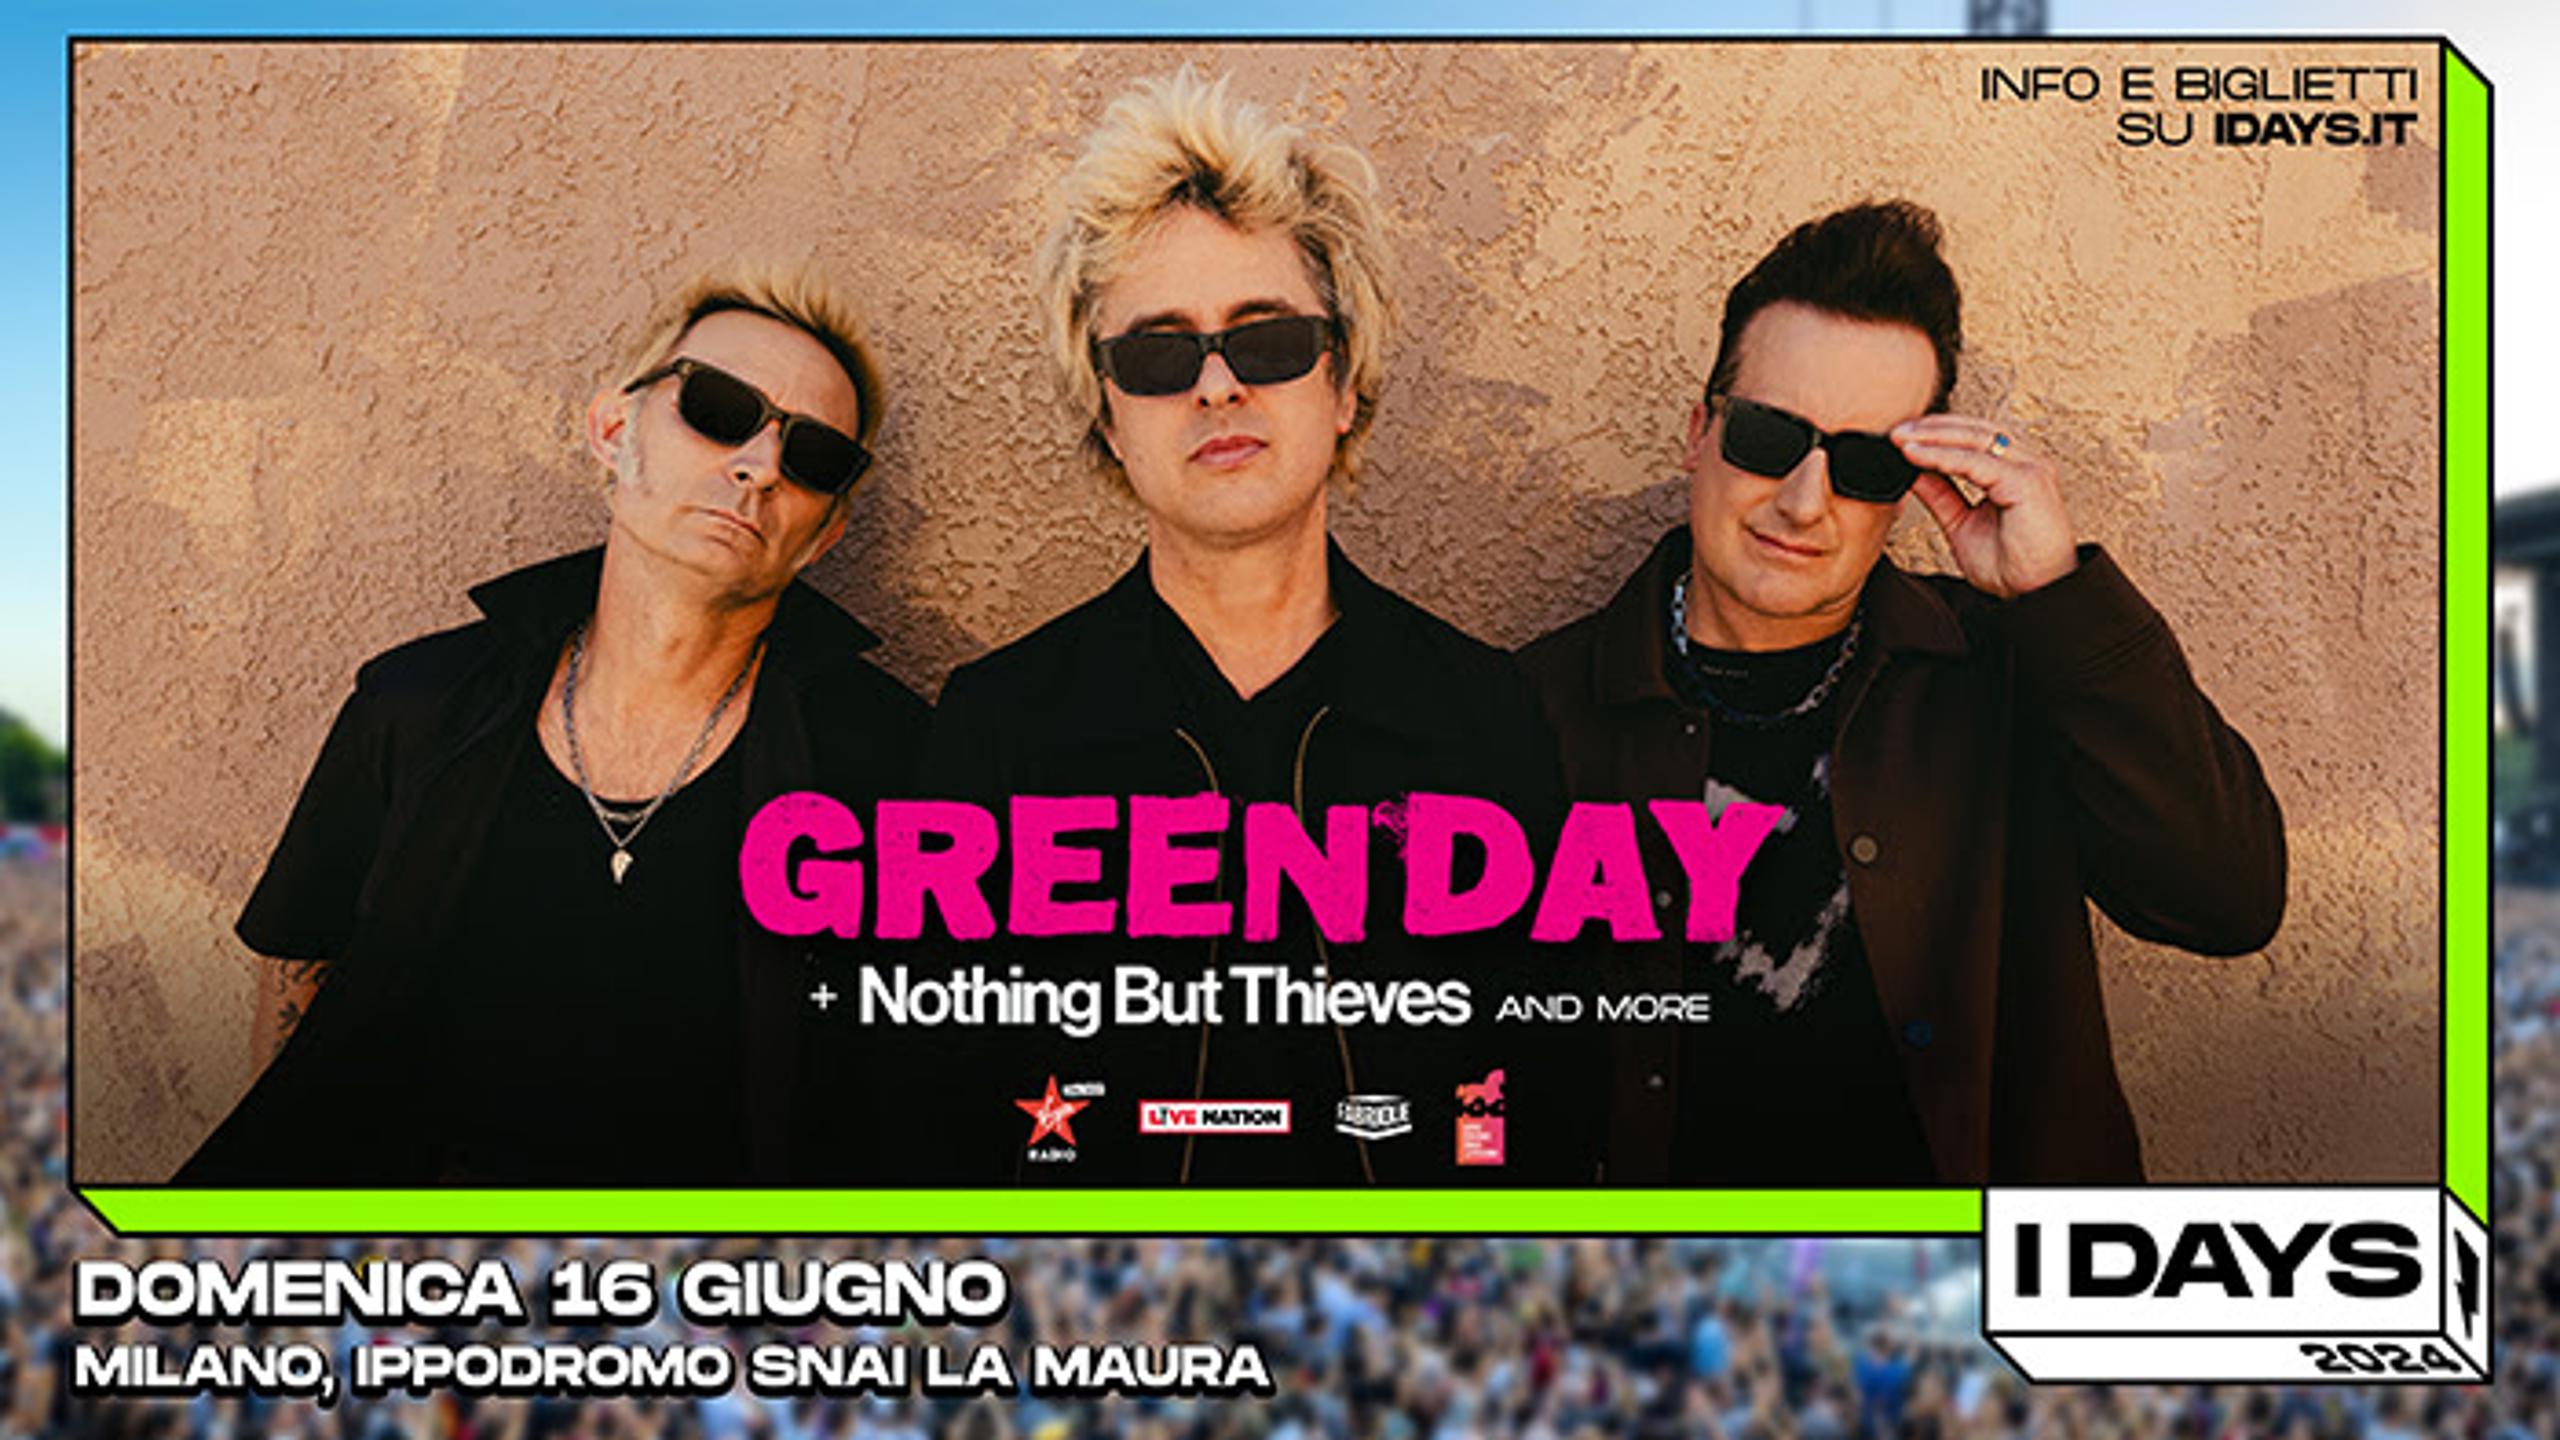 Green Day en Ippodromo Snai San Siro Tickets